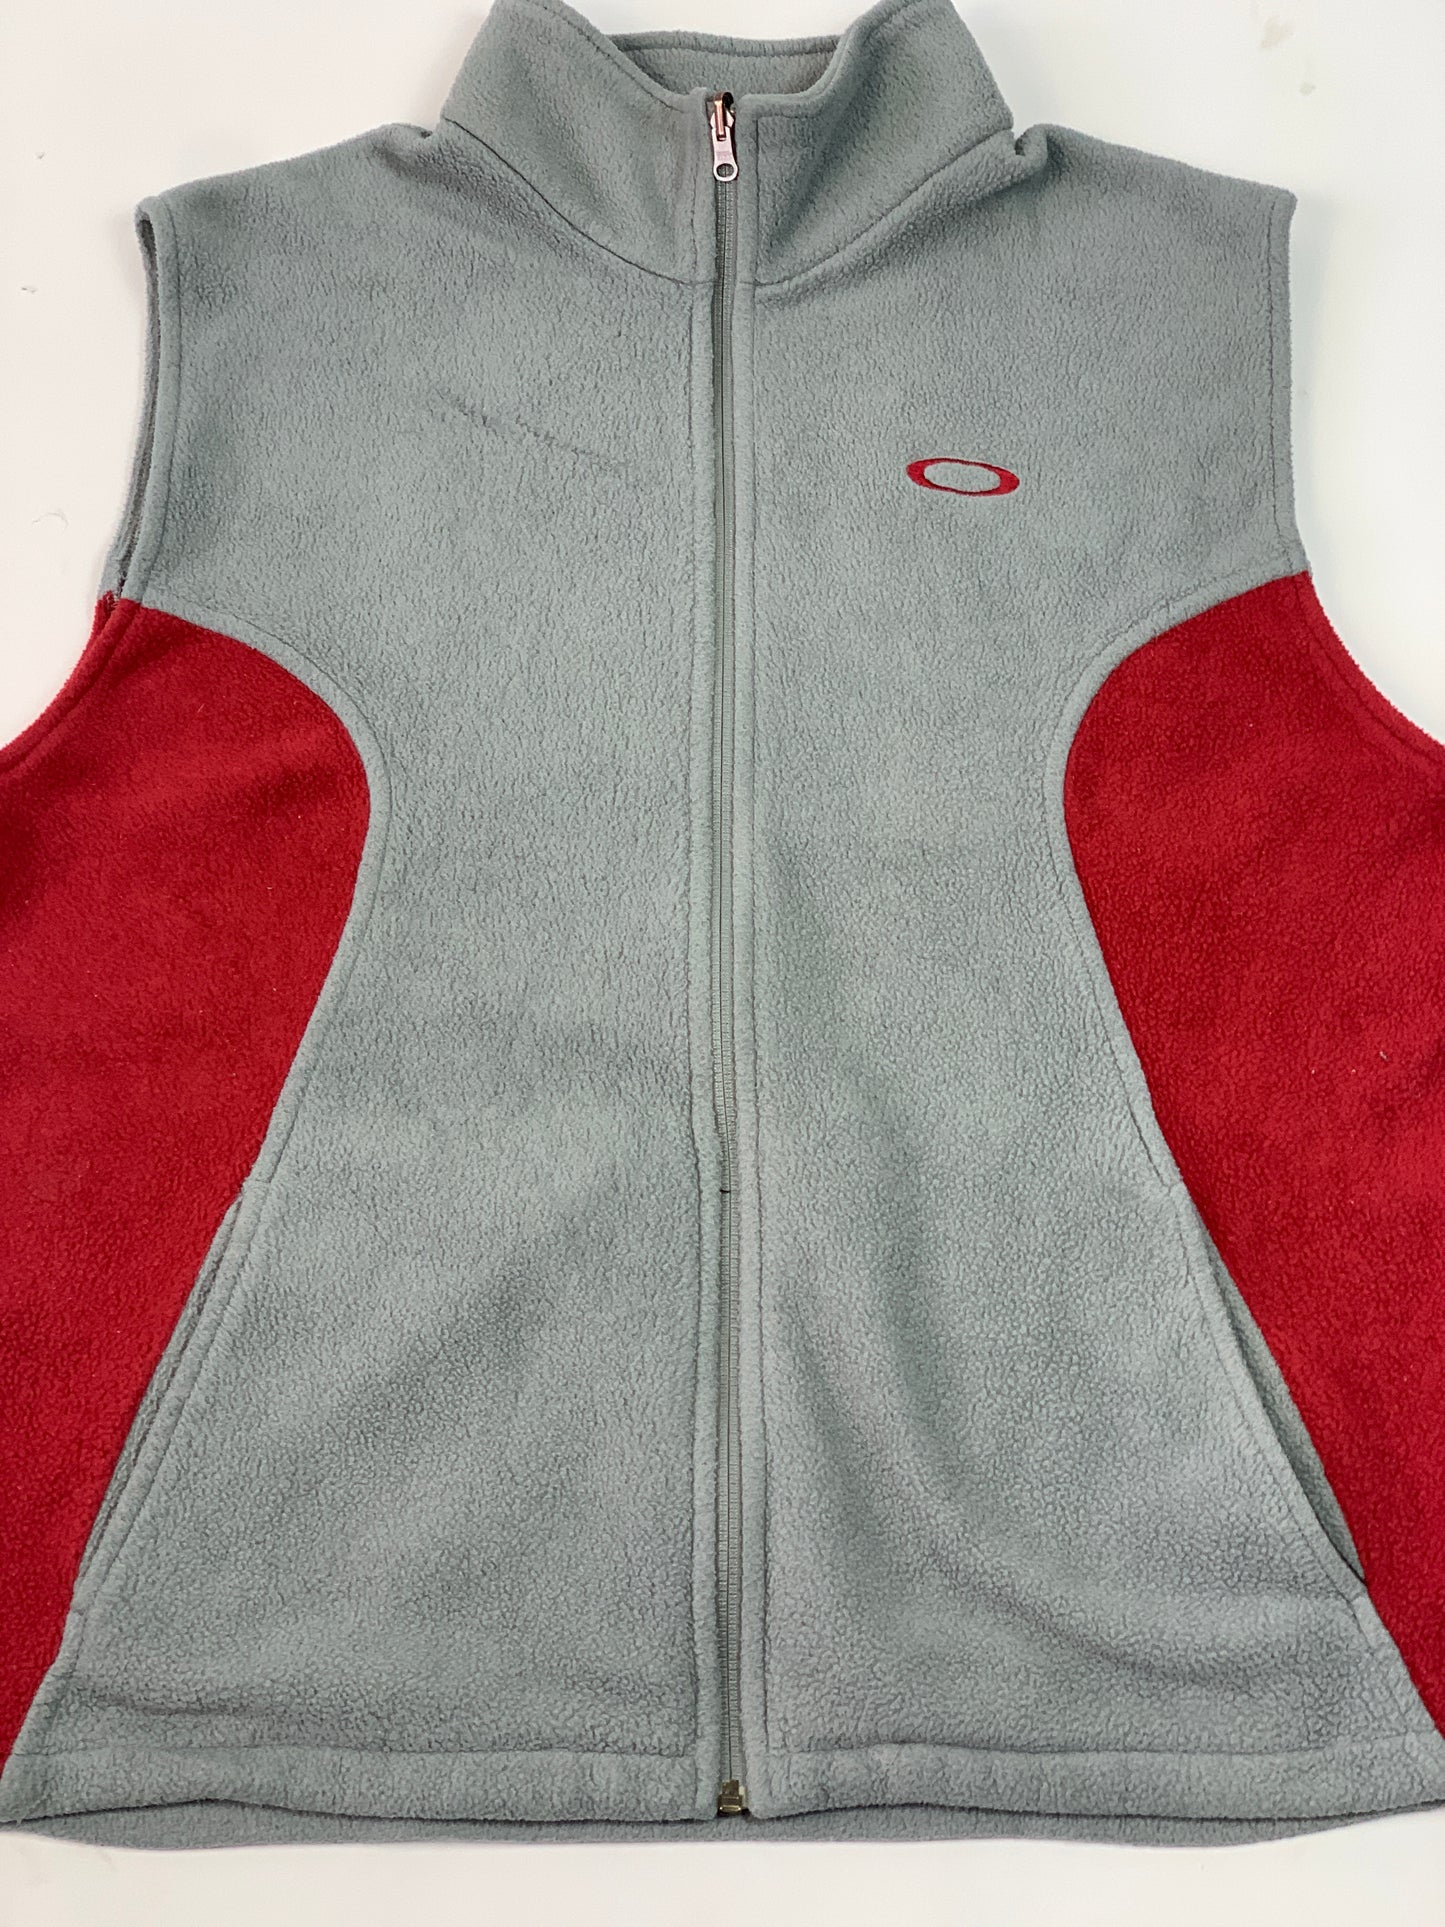 Oakley Fleece Vintage Vest - XL